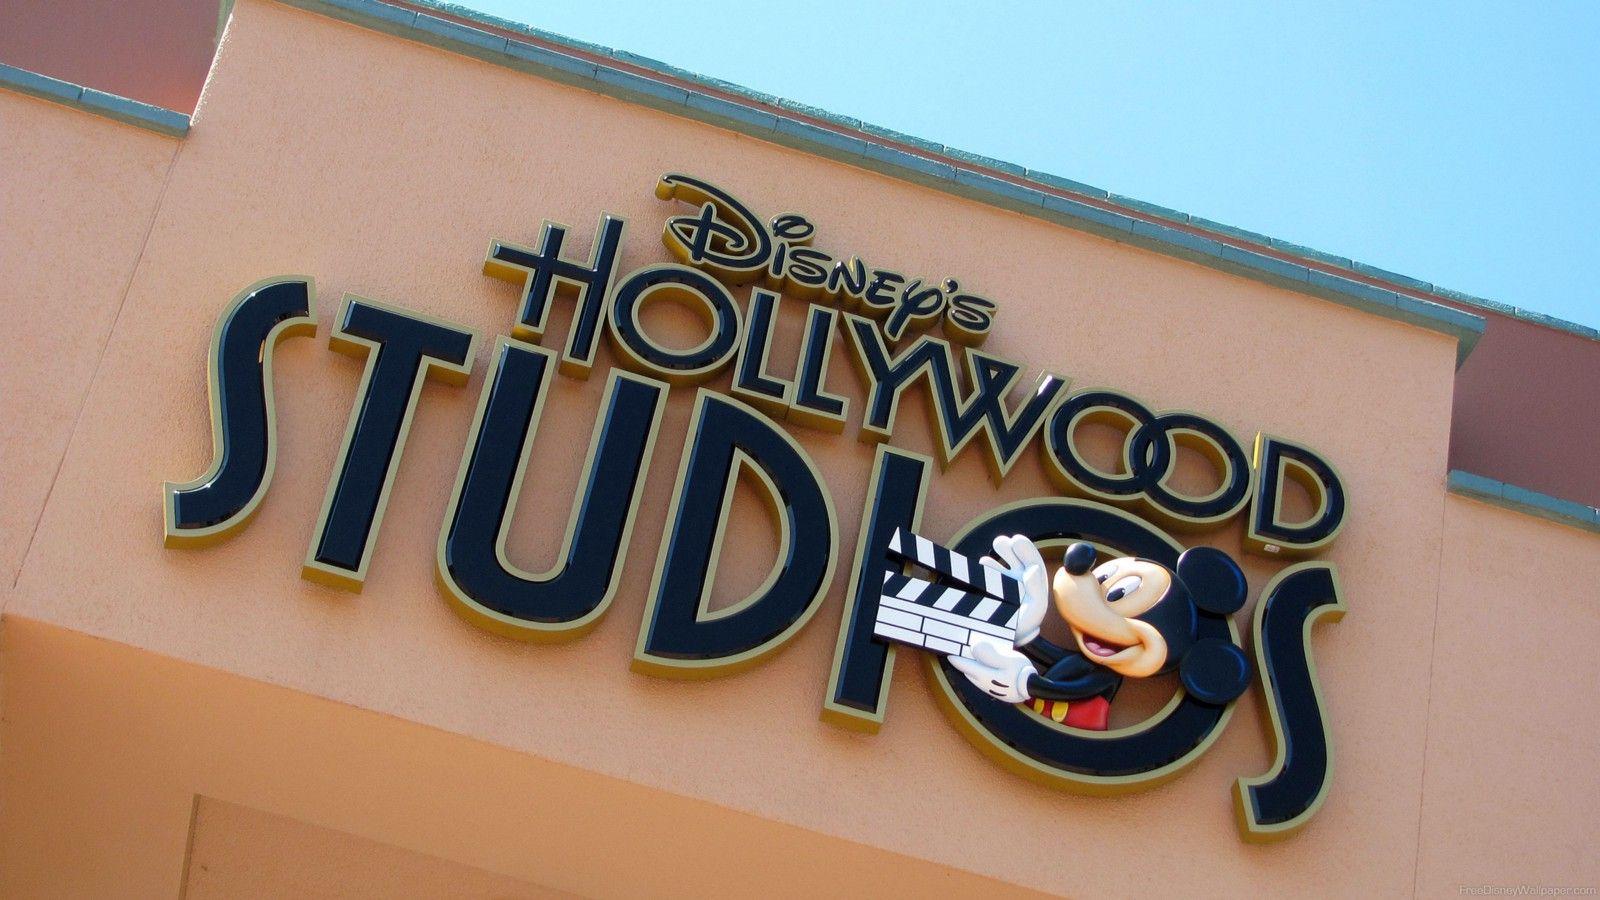 Disney Hollywood Studios Logo - Is Disney's Hollywood Studios Worth Going to?